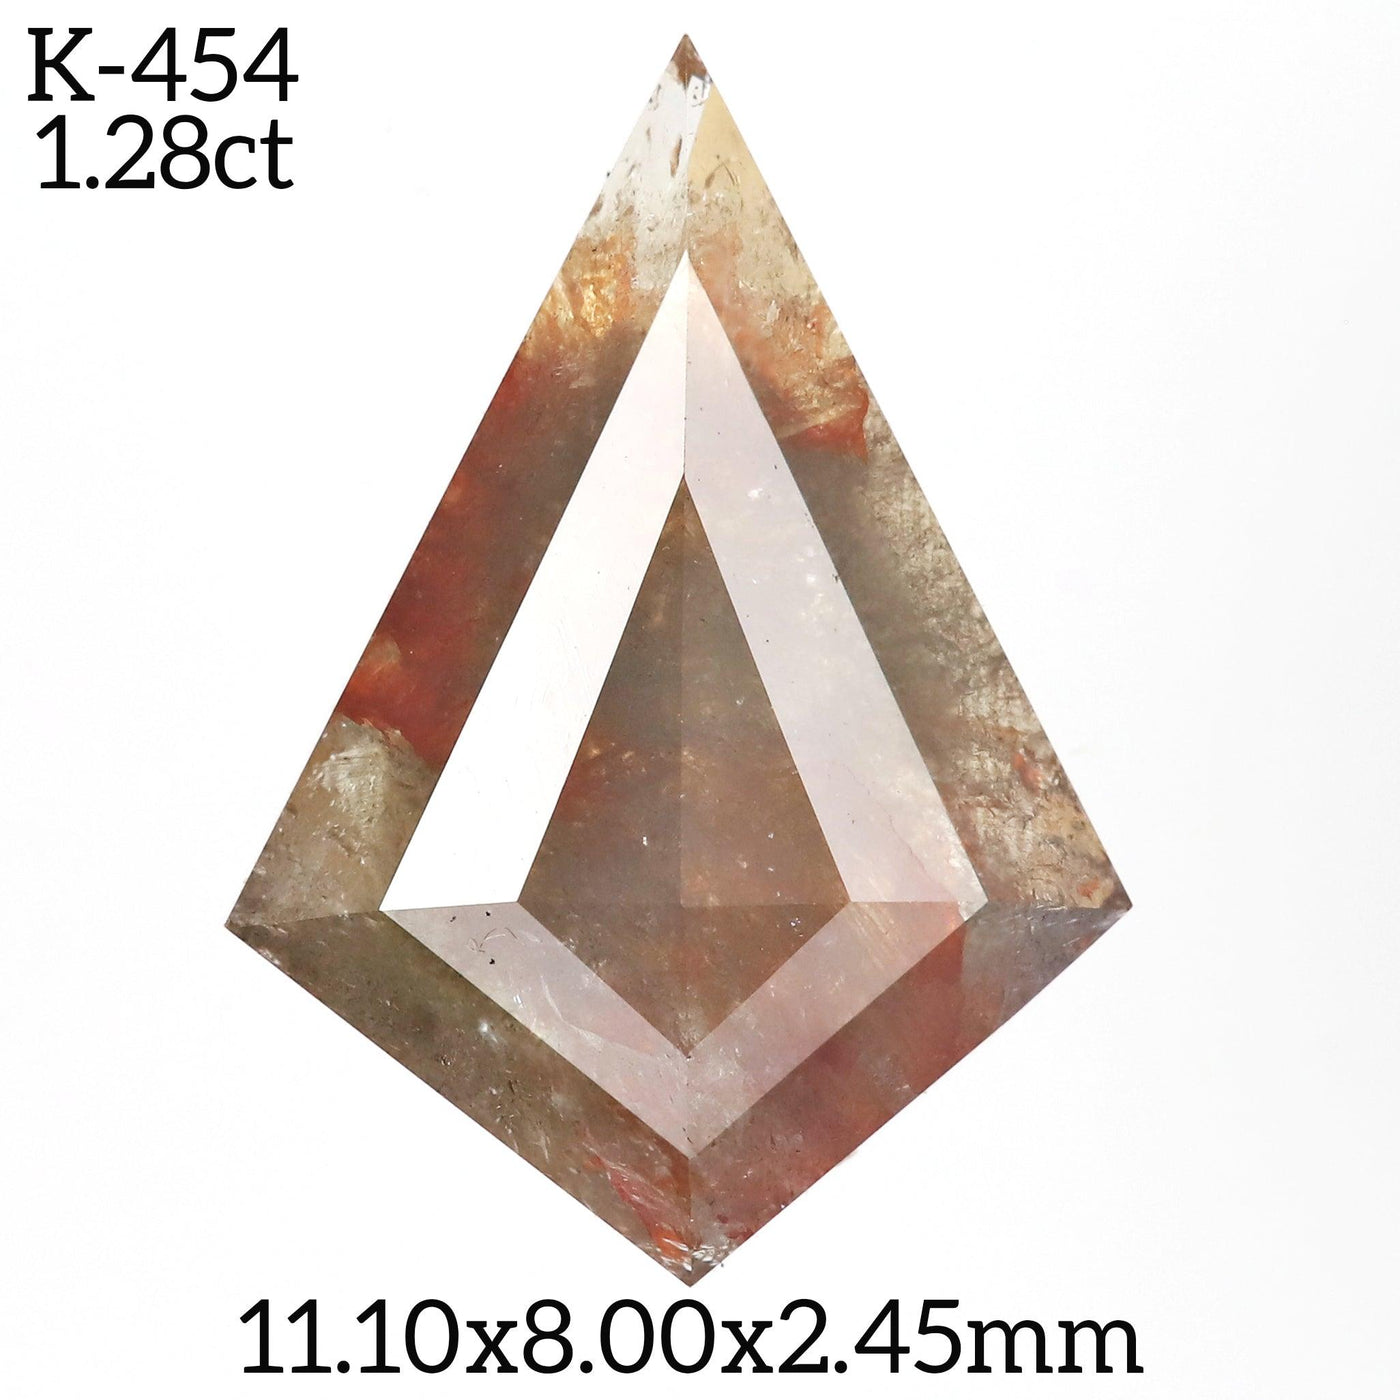 K454 - Salt and pepper kite diamond - Rubysta